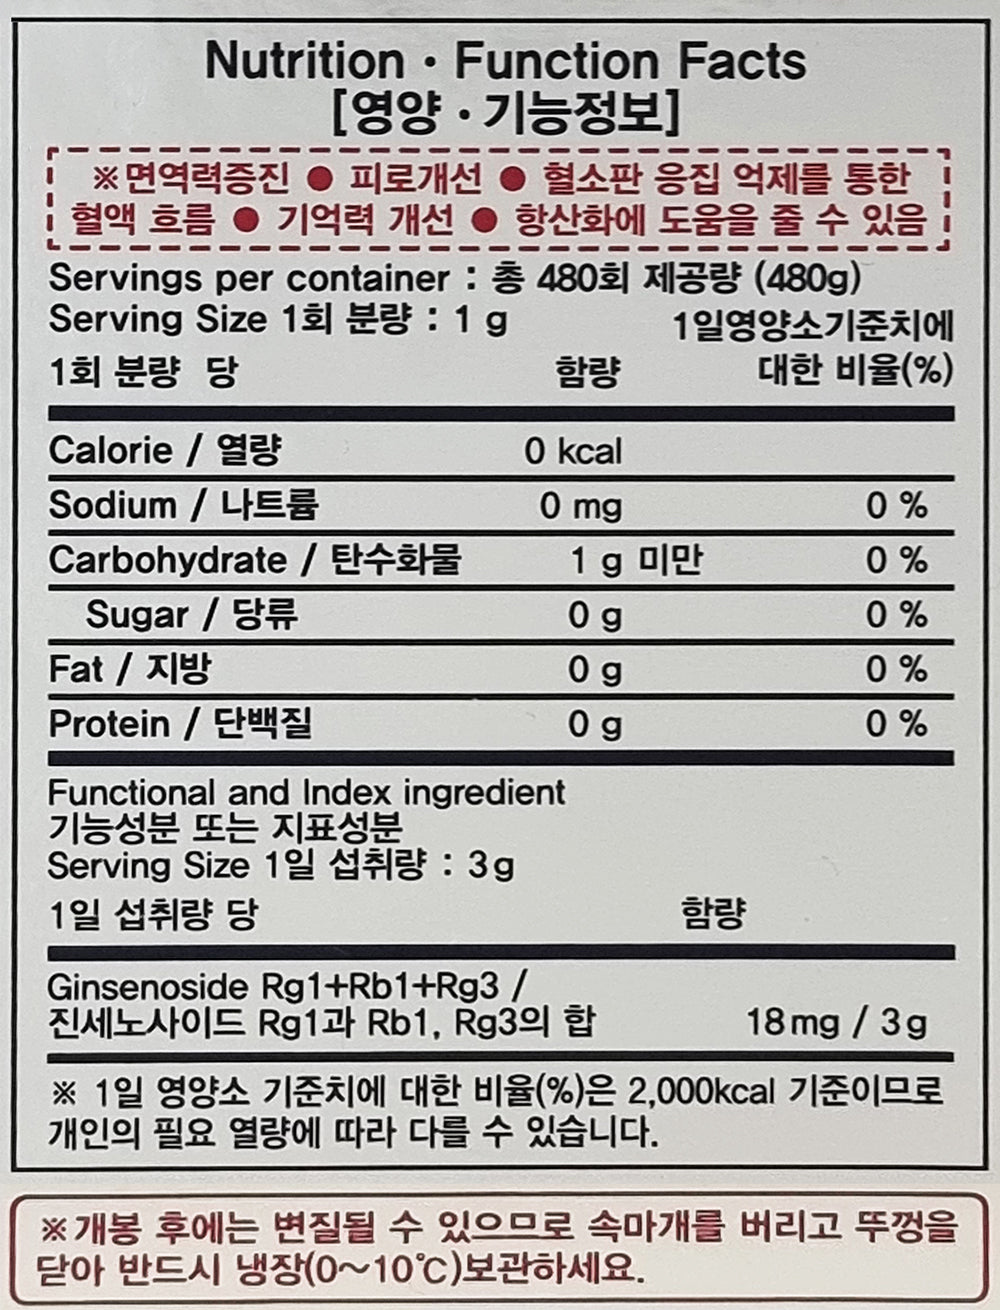 NONGHYUP The Best Korean Red ginseng Extract Heath supplements 480g